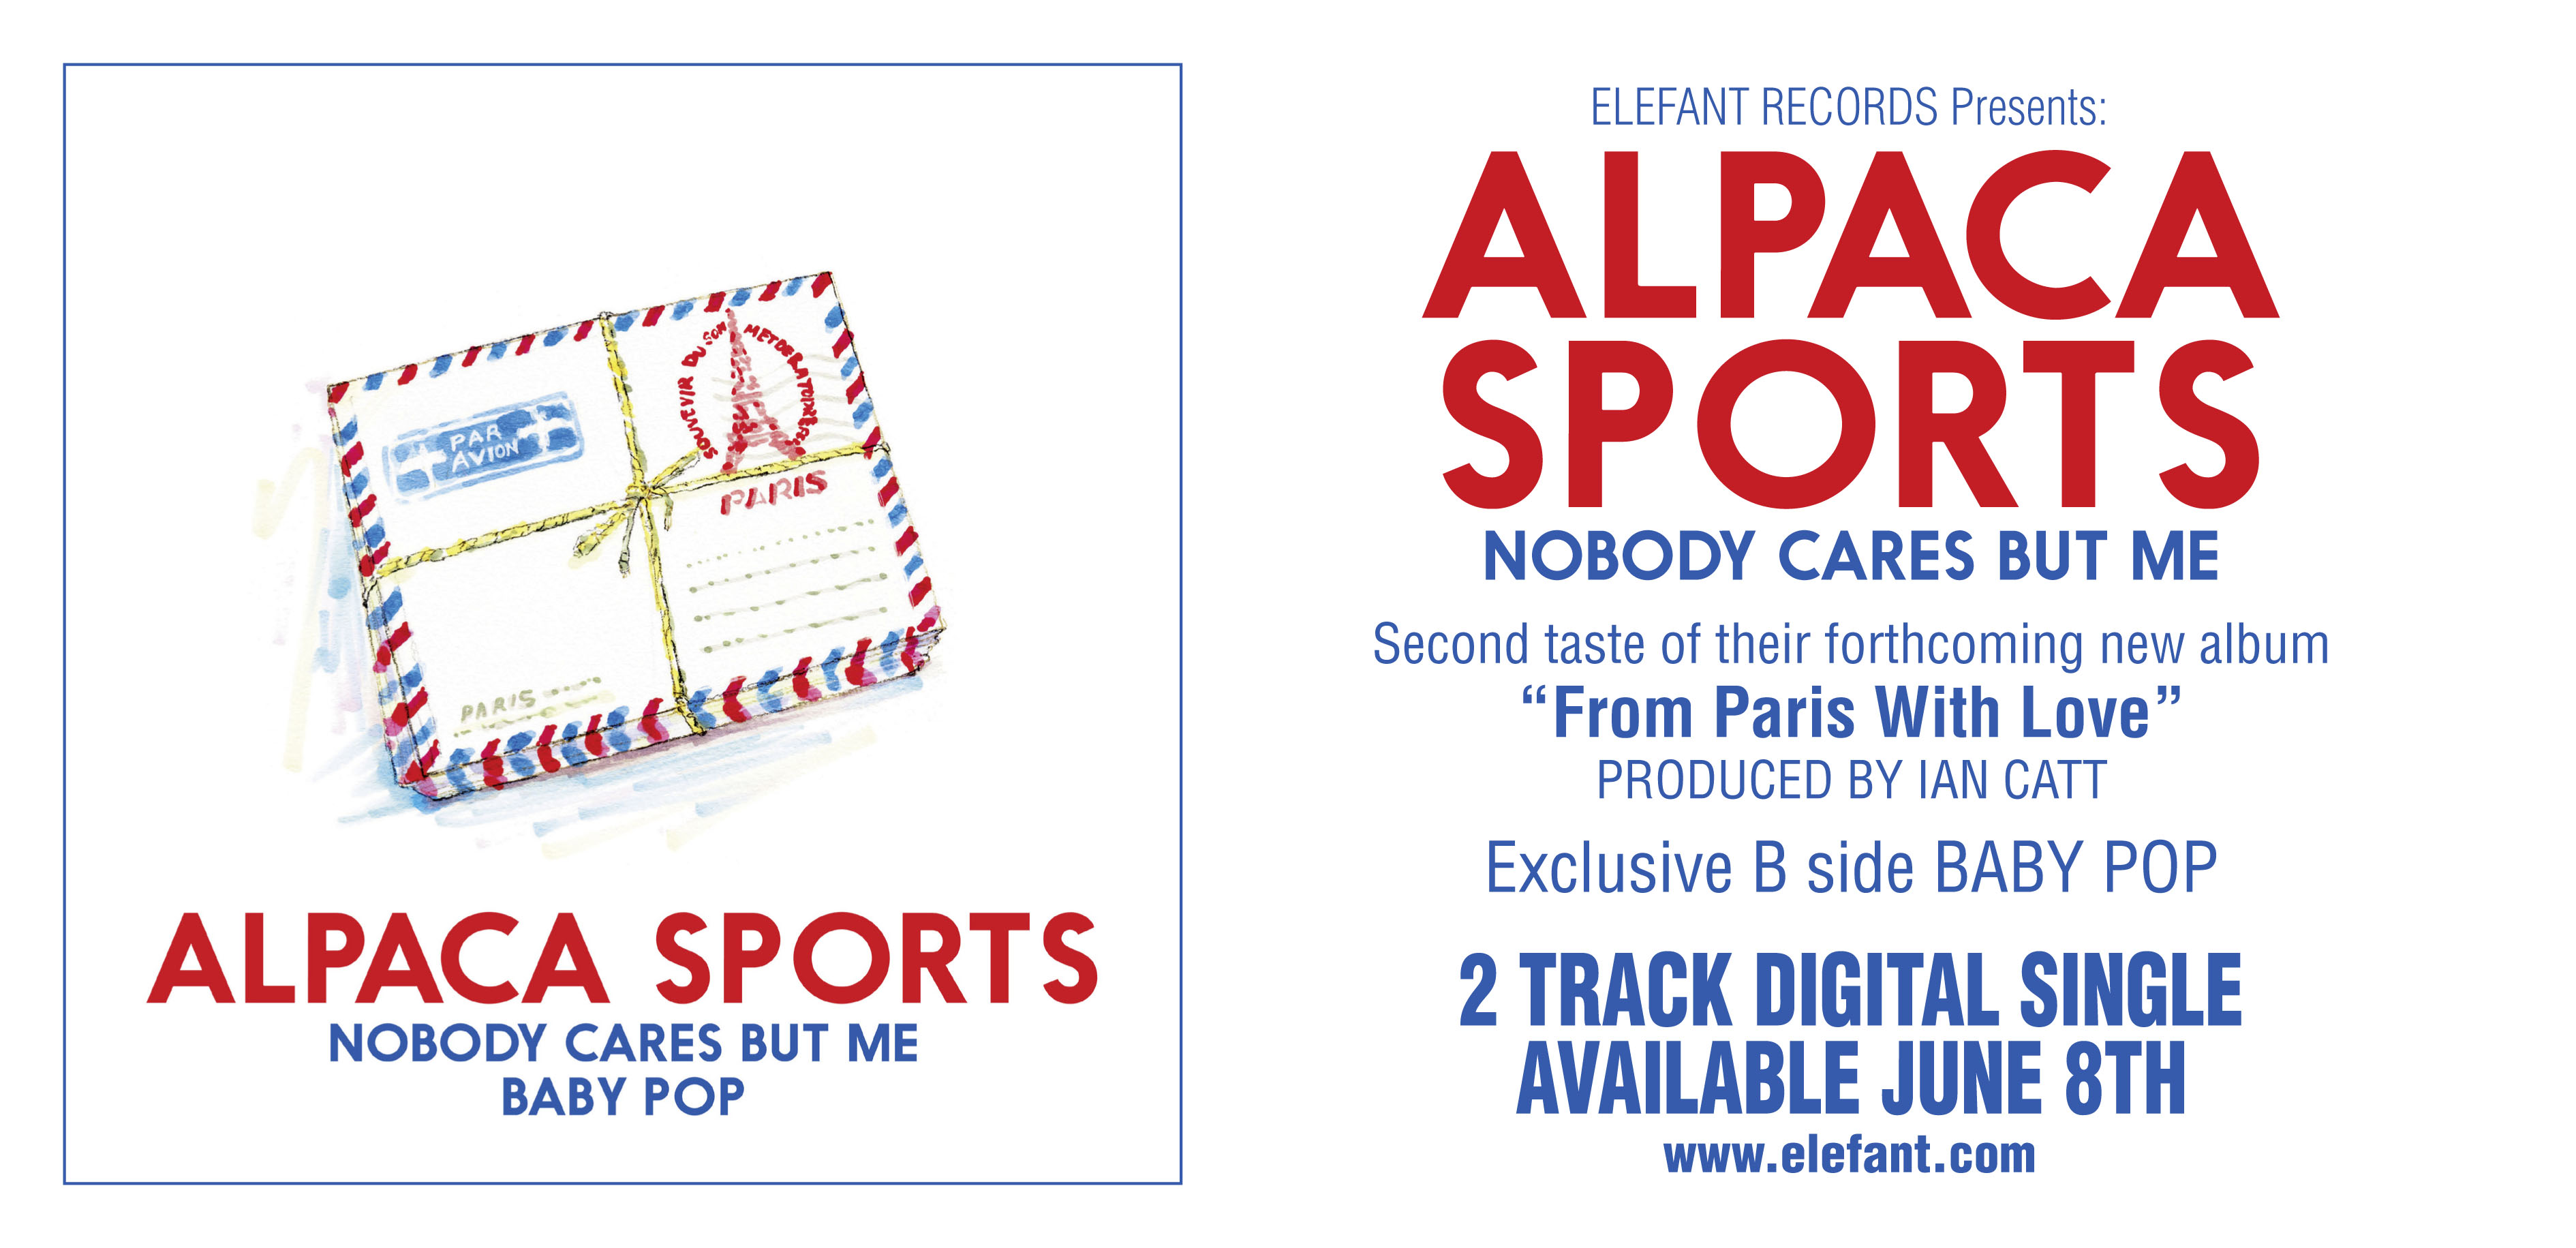 Alpaca Sports "Nobody Cares But Me" Single Digital